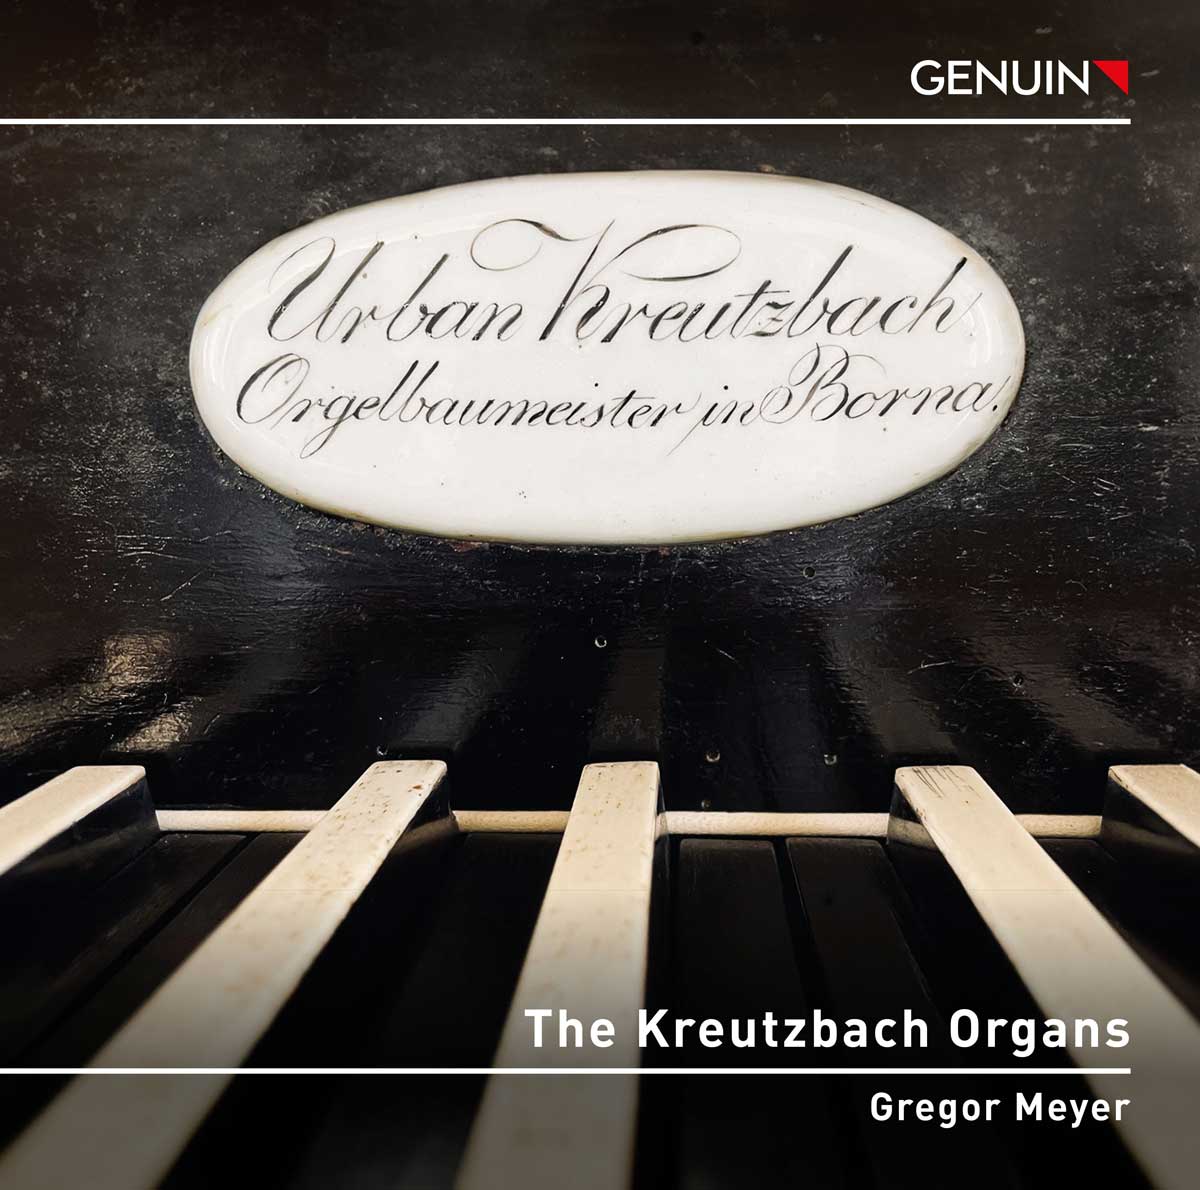 CD album cover 'The Kreutzbach Organs' (GEN 24862) with Gregor Meyer